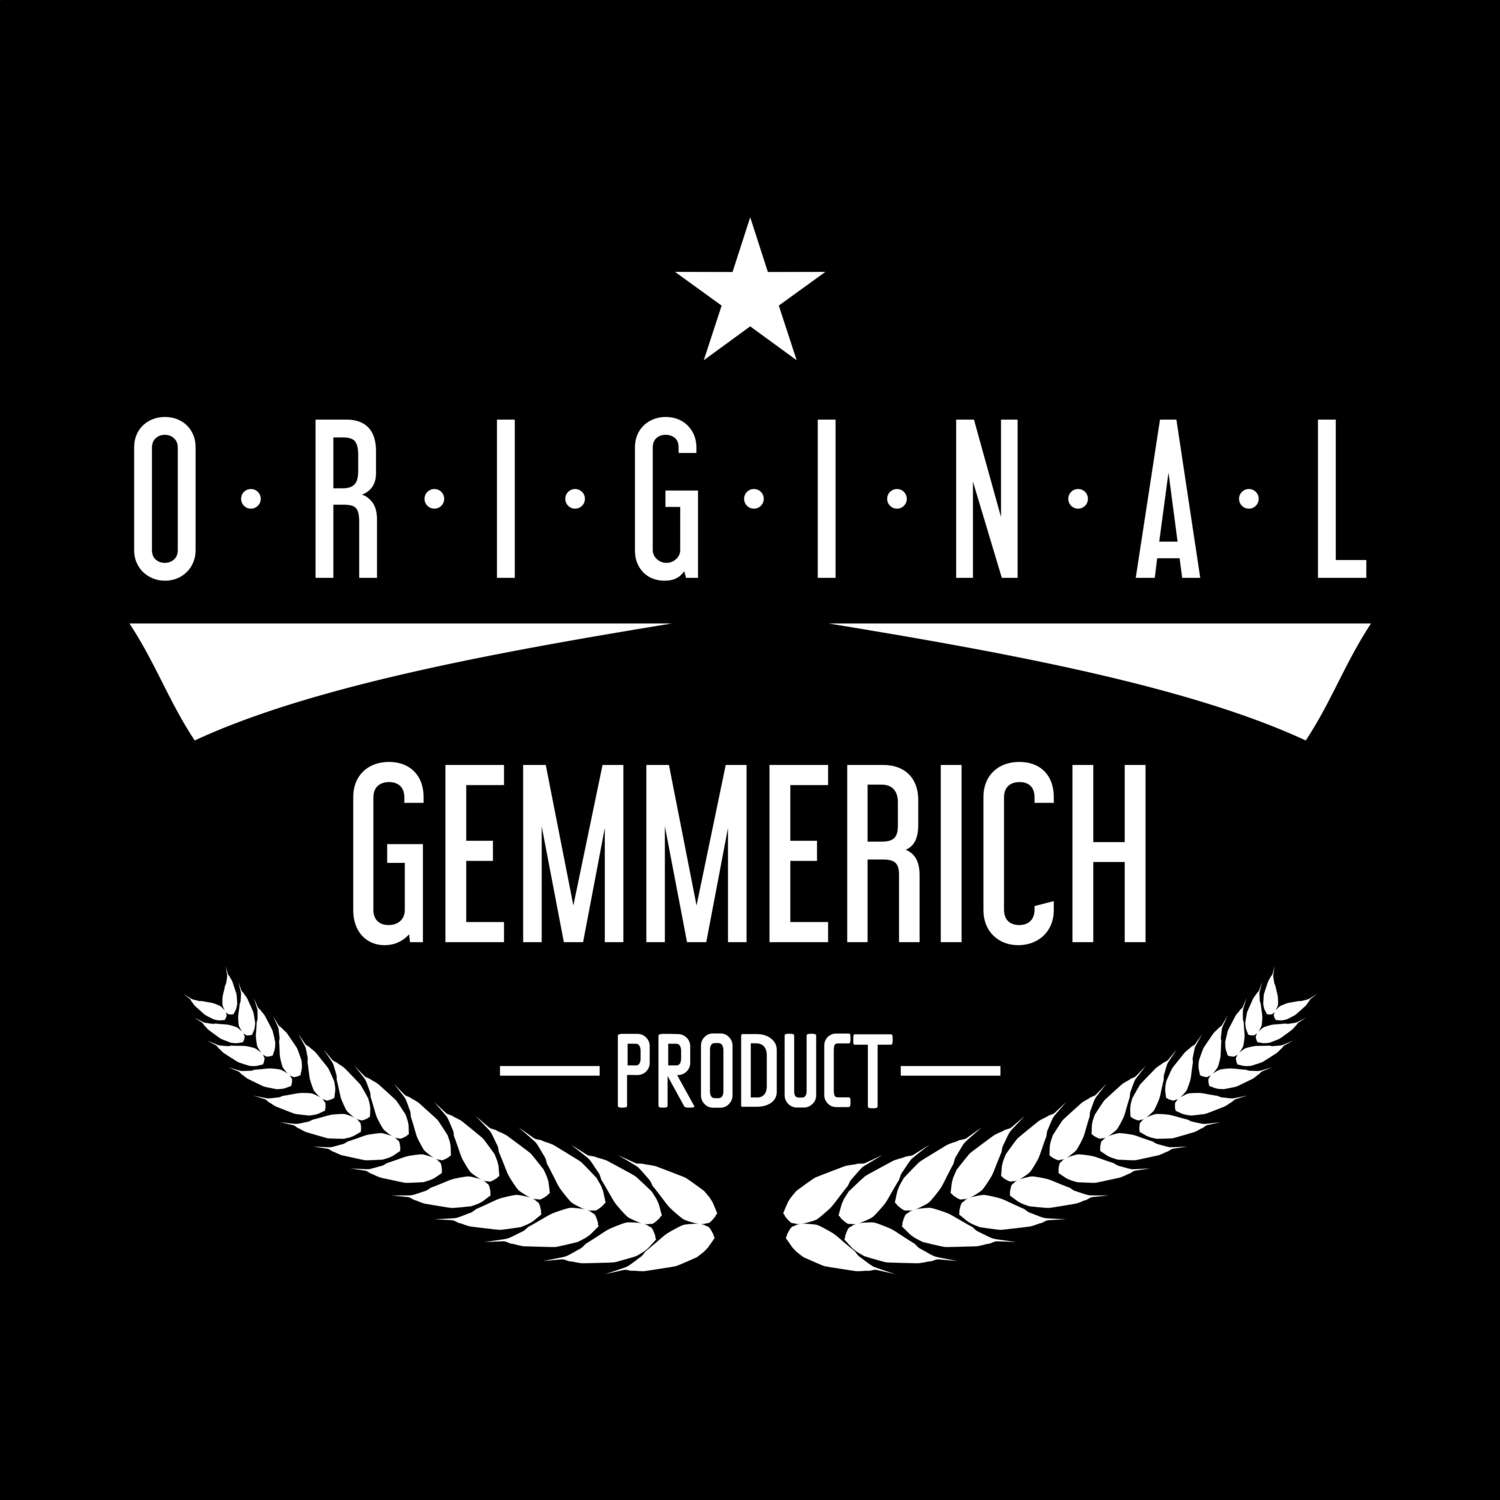 Gemmerich T-Shirt »Original Product«